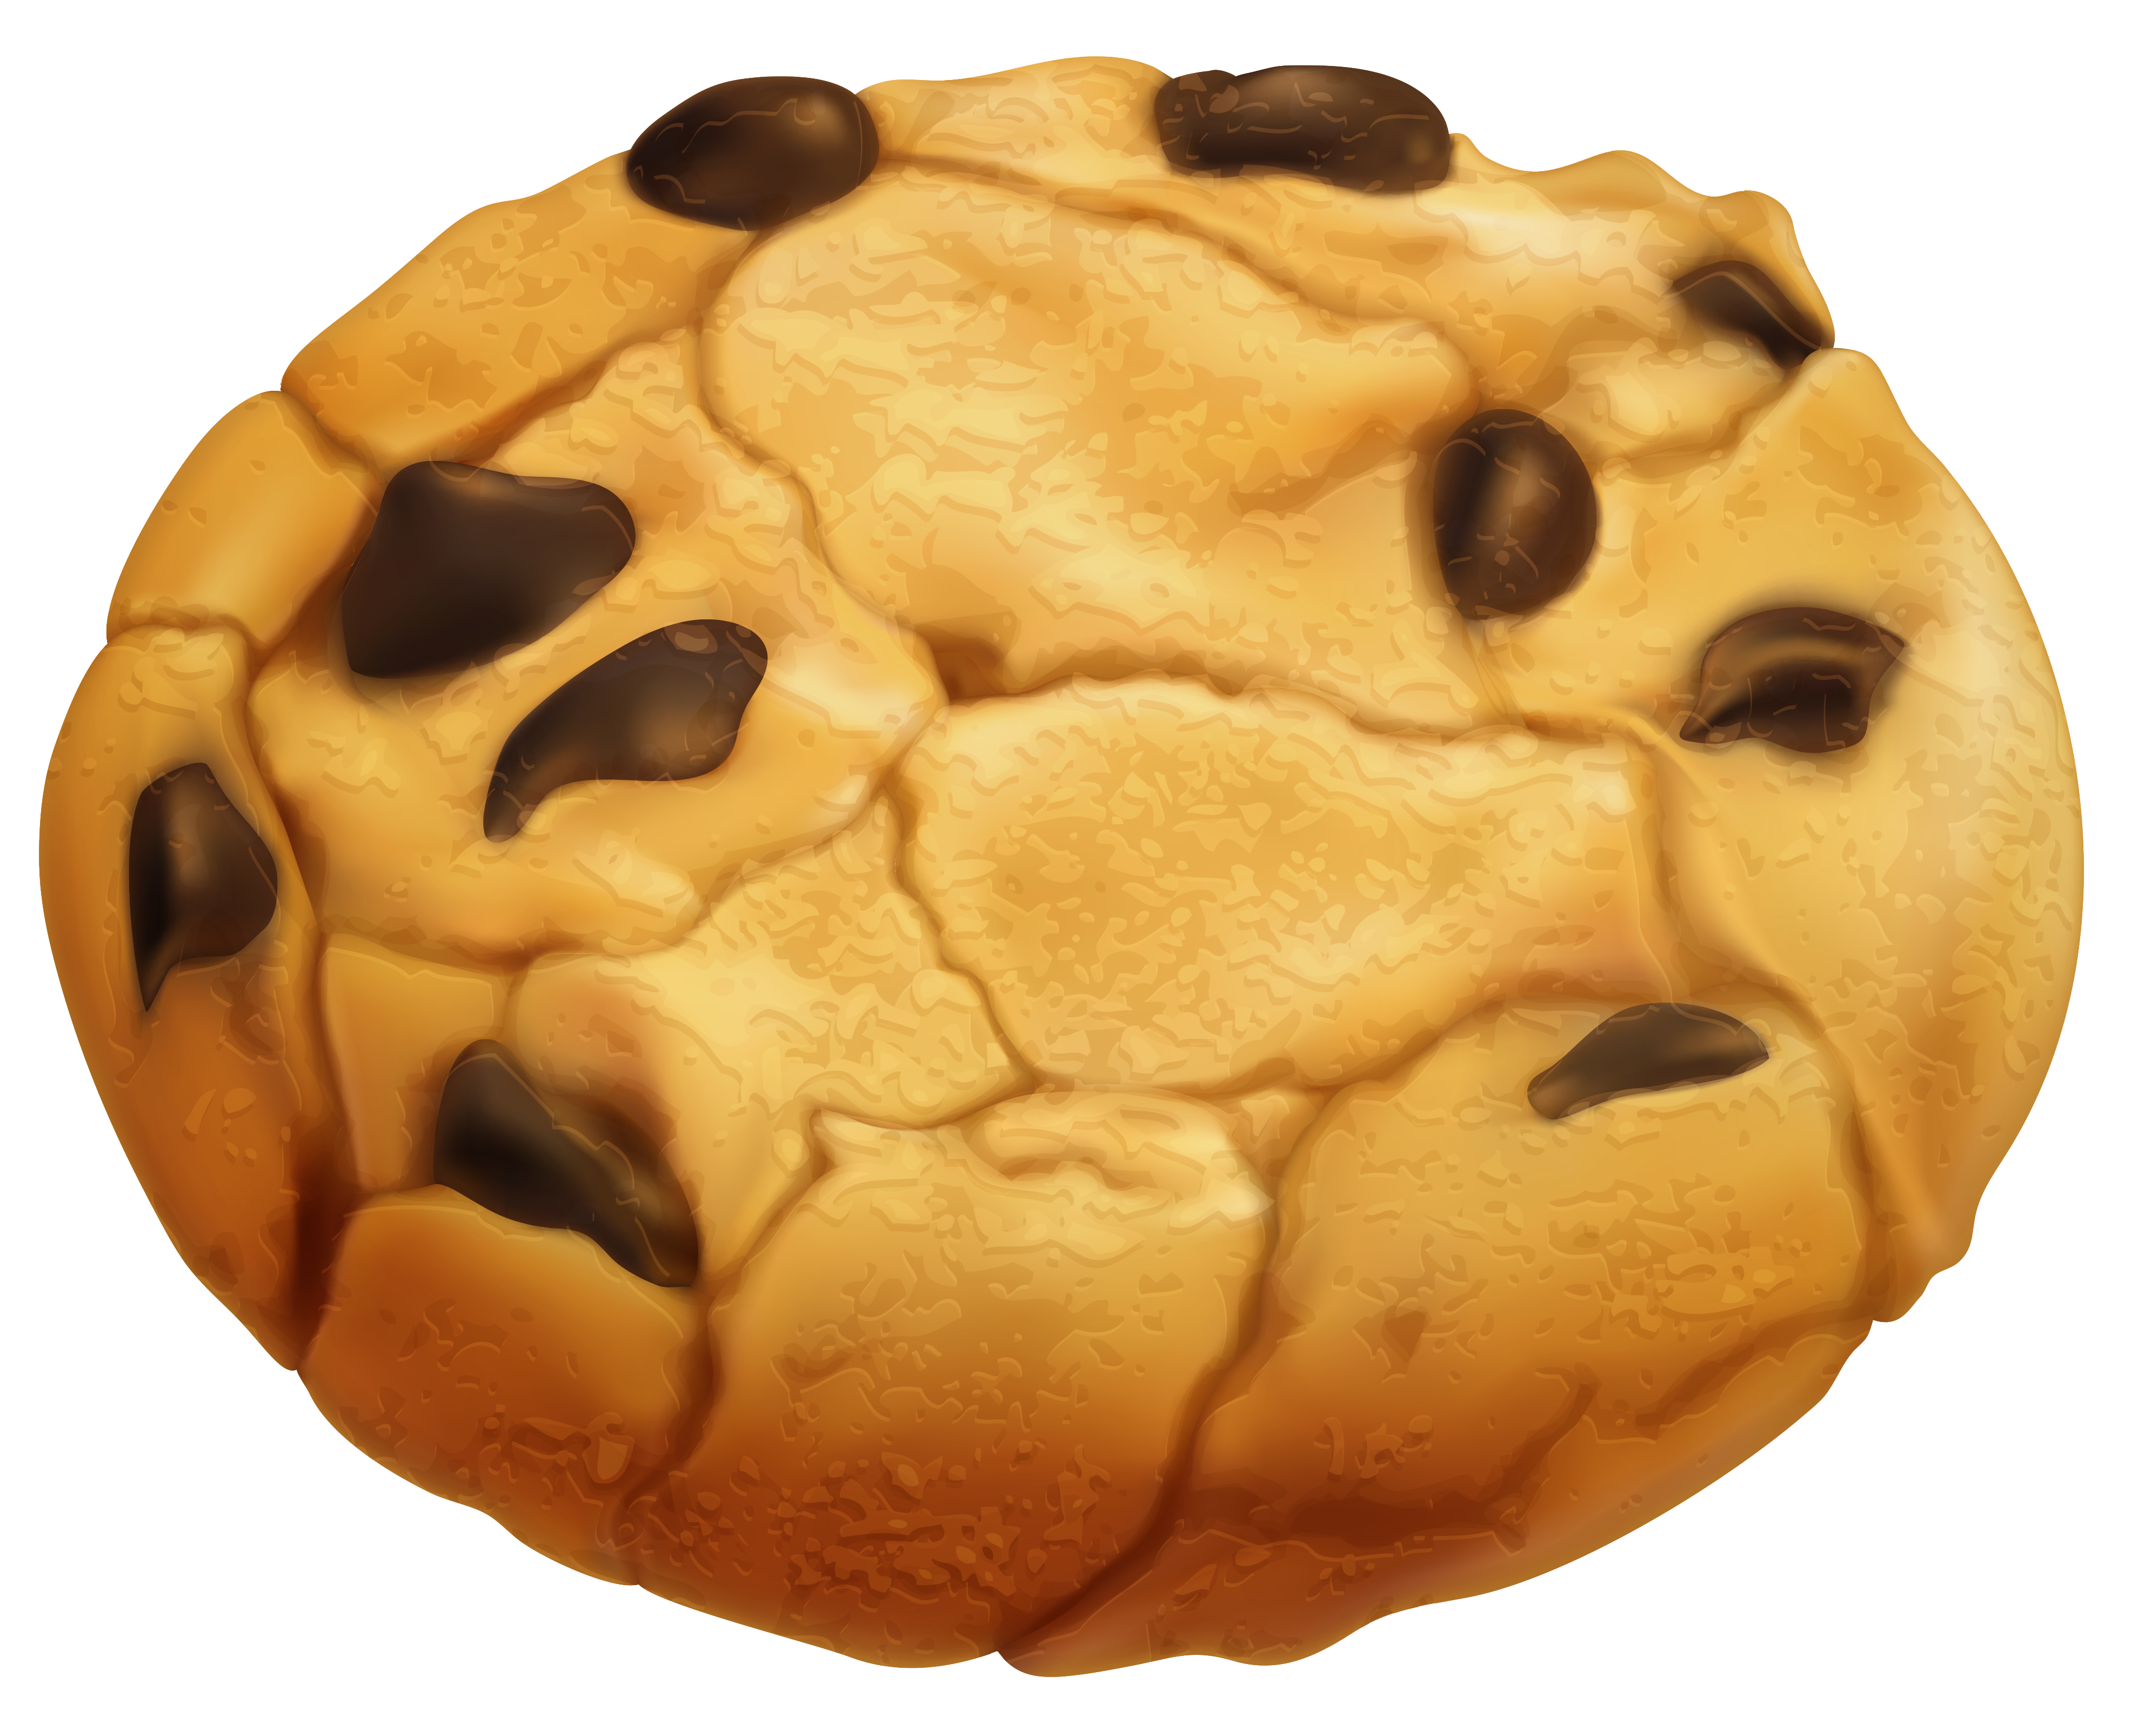 File:Choco chip cookie.jpg